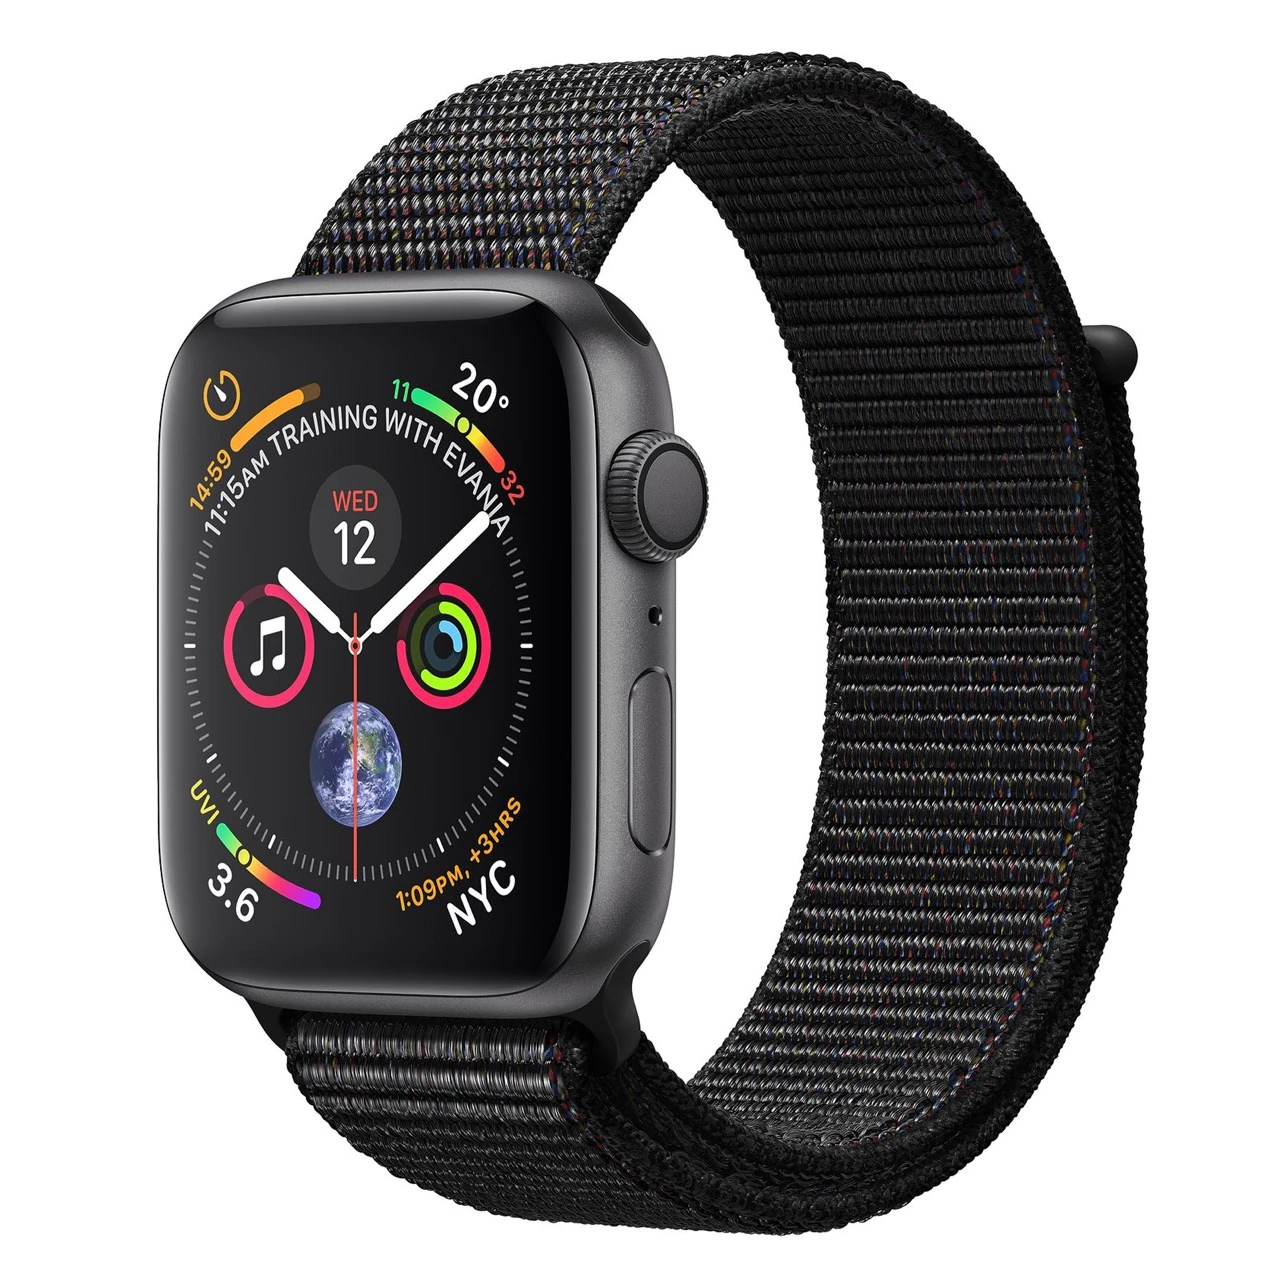 Apple Watch Series 4 (GPS) 44mm Space Gray Aluminium Case with Black Sport Loop (MU6E2)